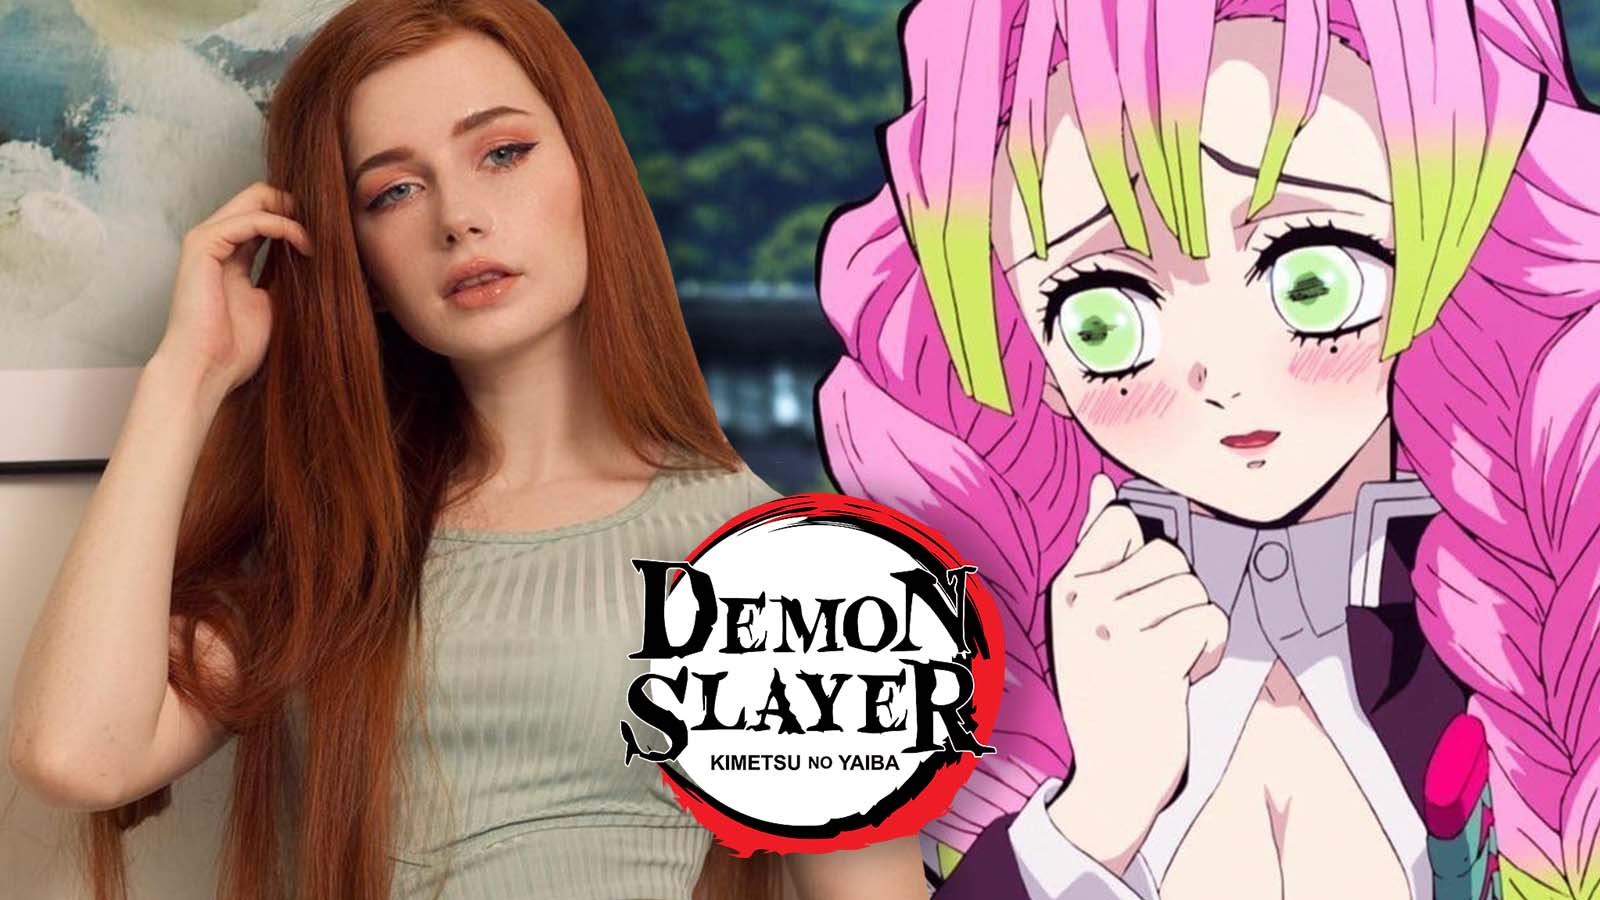 Demon slayer pink hair